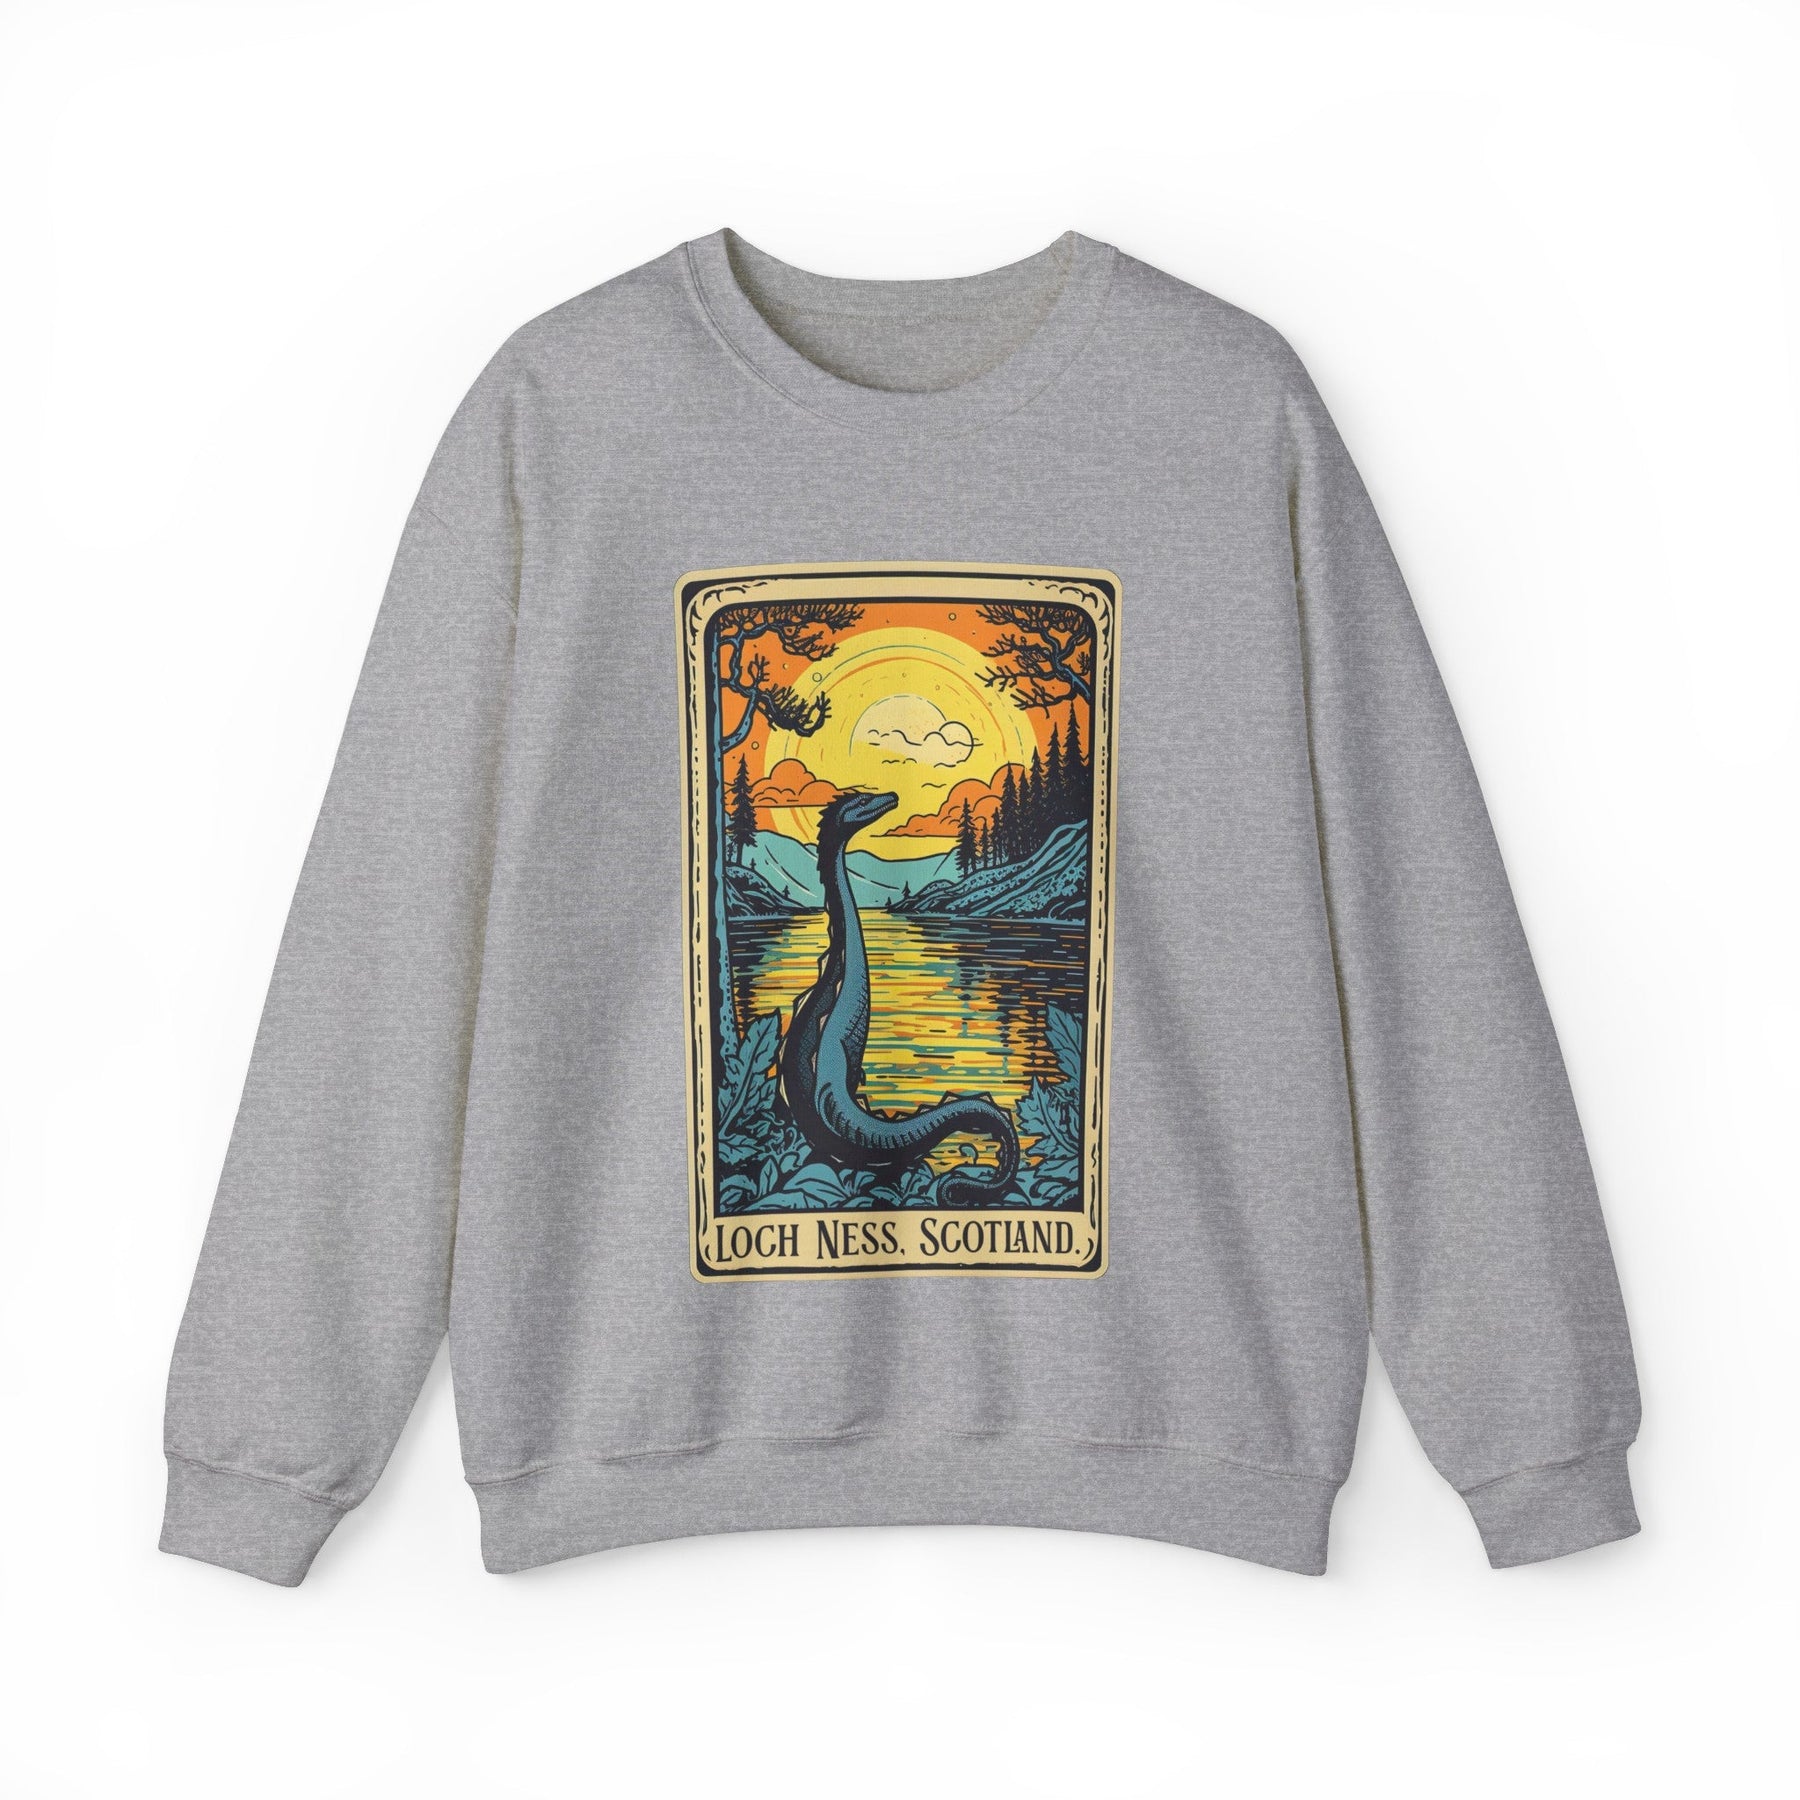 Loch Ness Monster Tarot Crew Neck Sweatshirt - Goth Cloth Co.Sweatshirt31382886631891852579